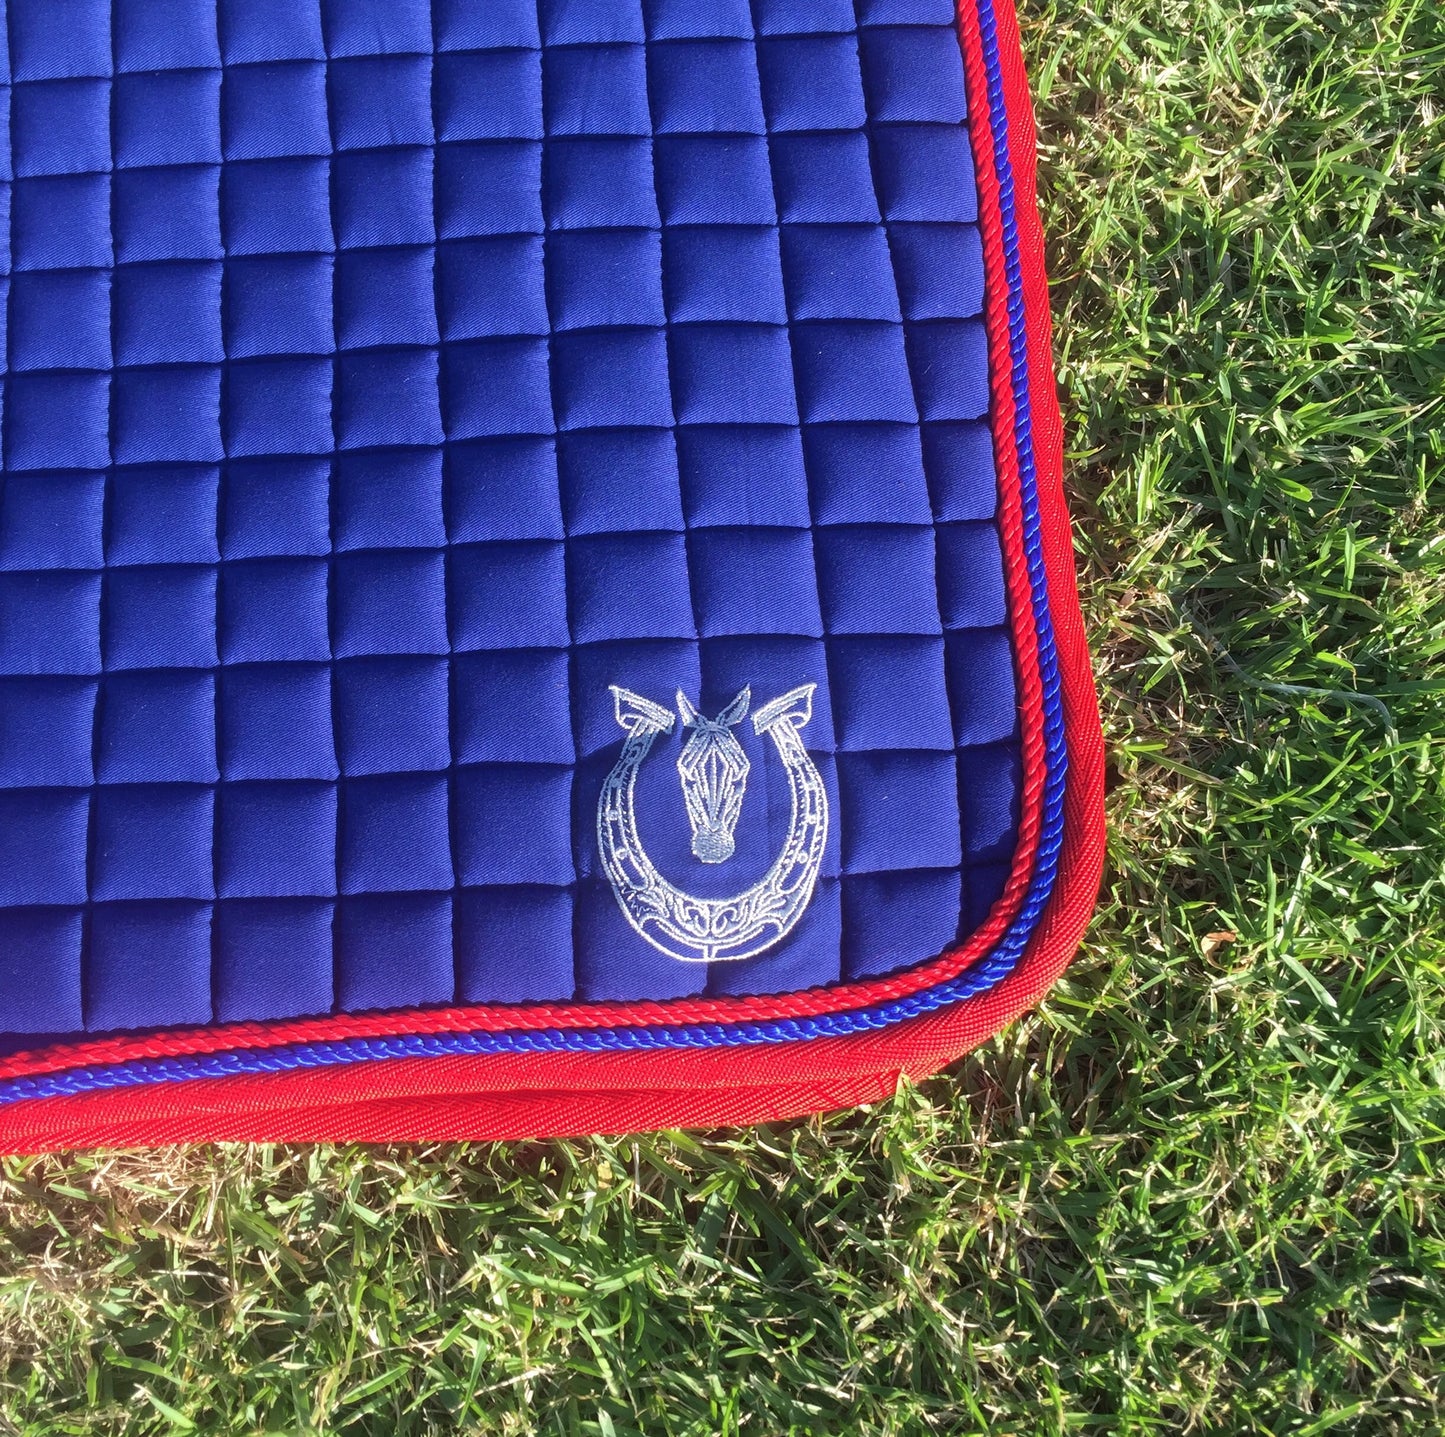 Royal blue and red jump pad